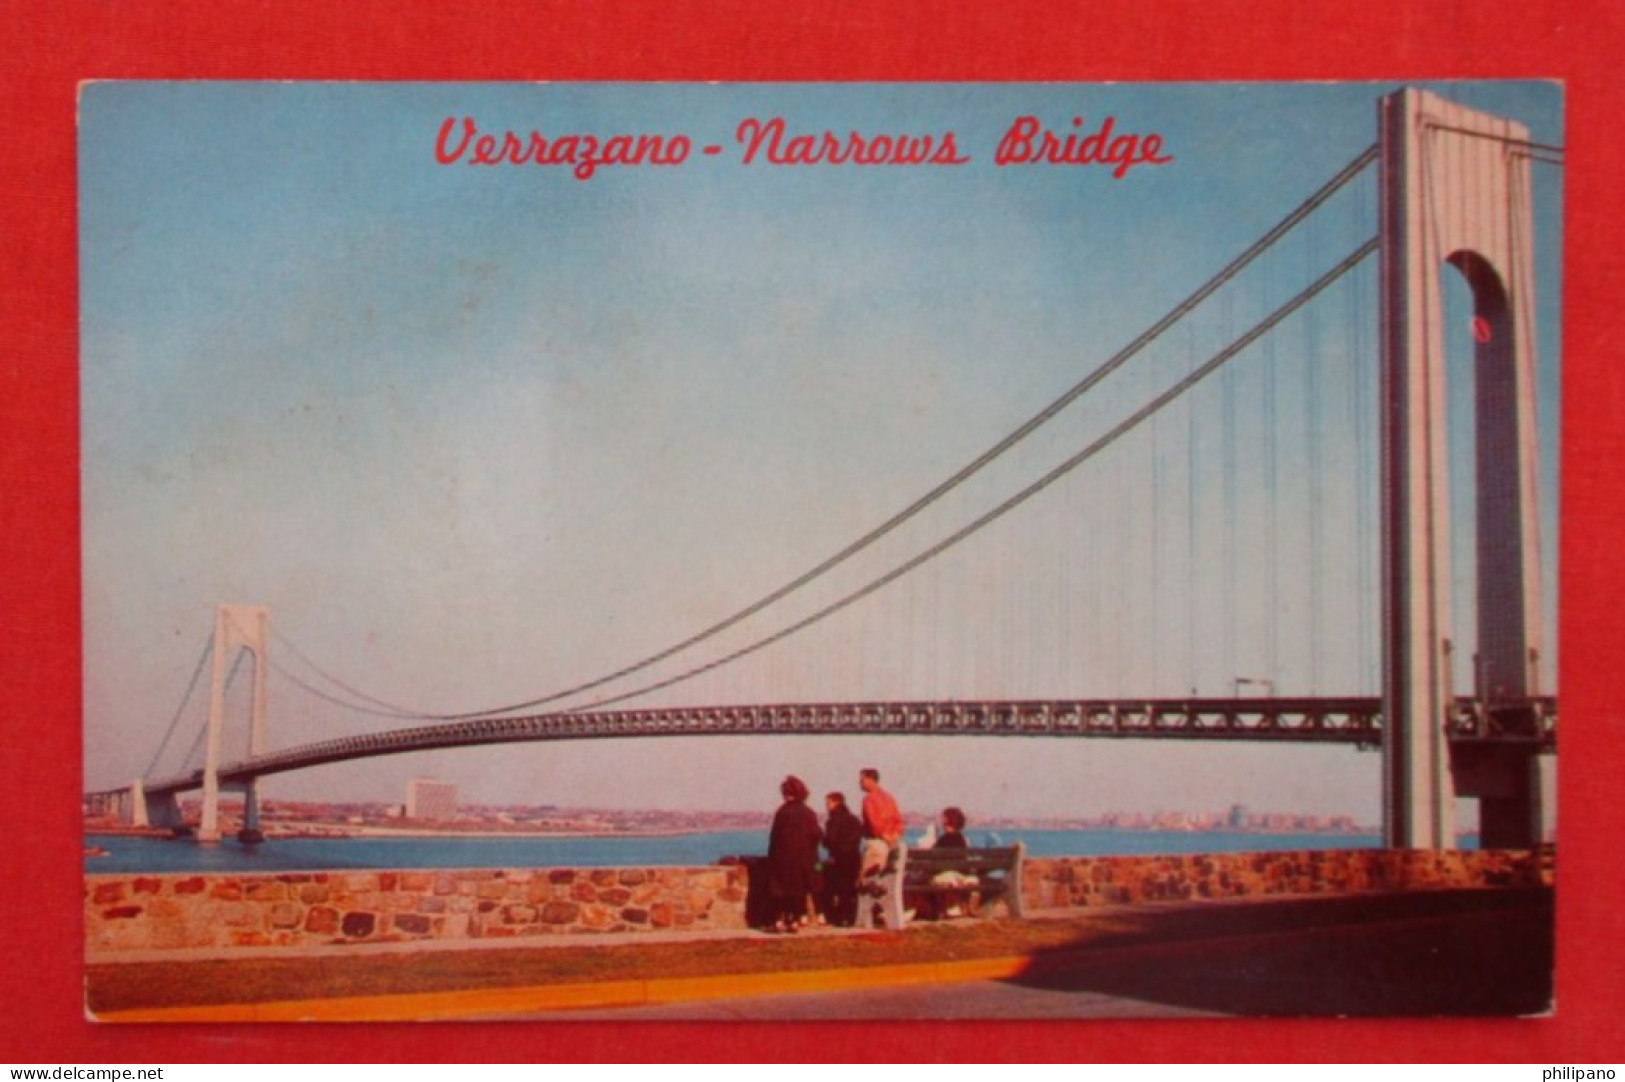 Verrazano Narrows Bridge.   New York > New York City   Ref 6335 - Manhattan